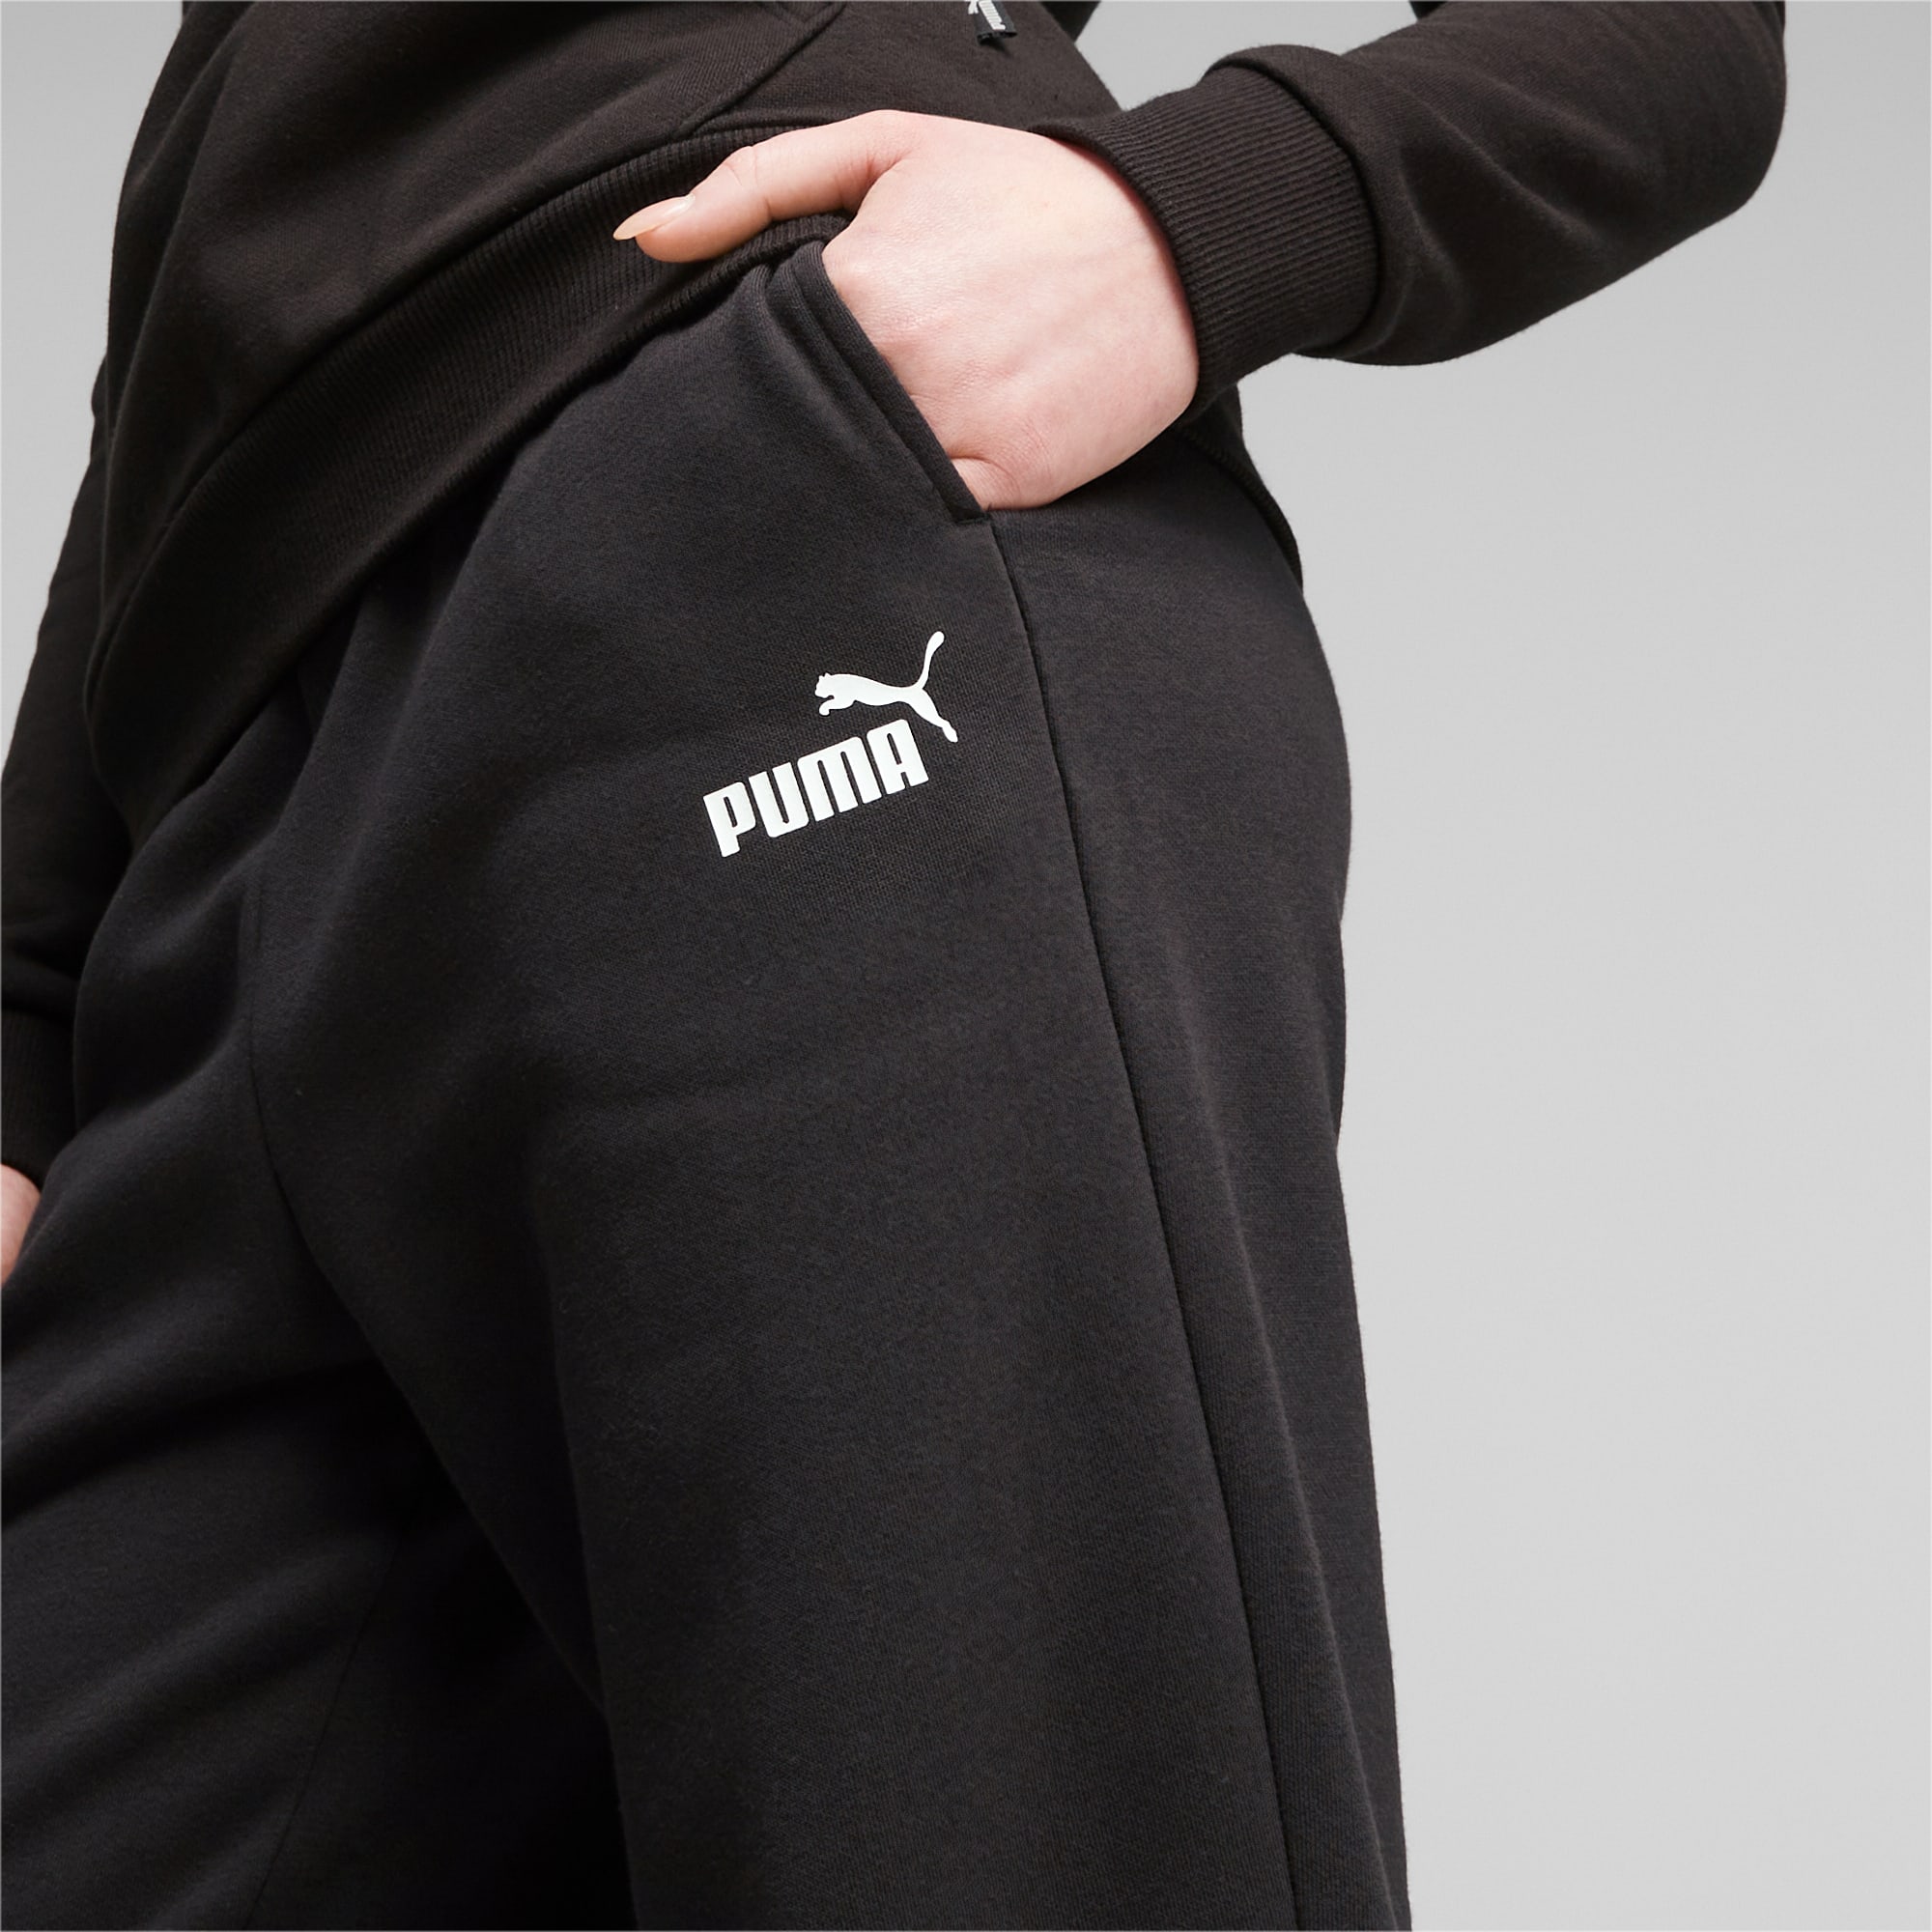 PUMA Ess+ Comfort Women's Sweatpants, Black, Size XS, Clothing